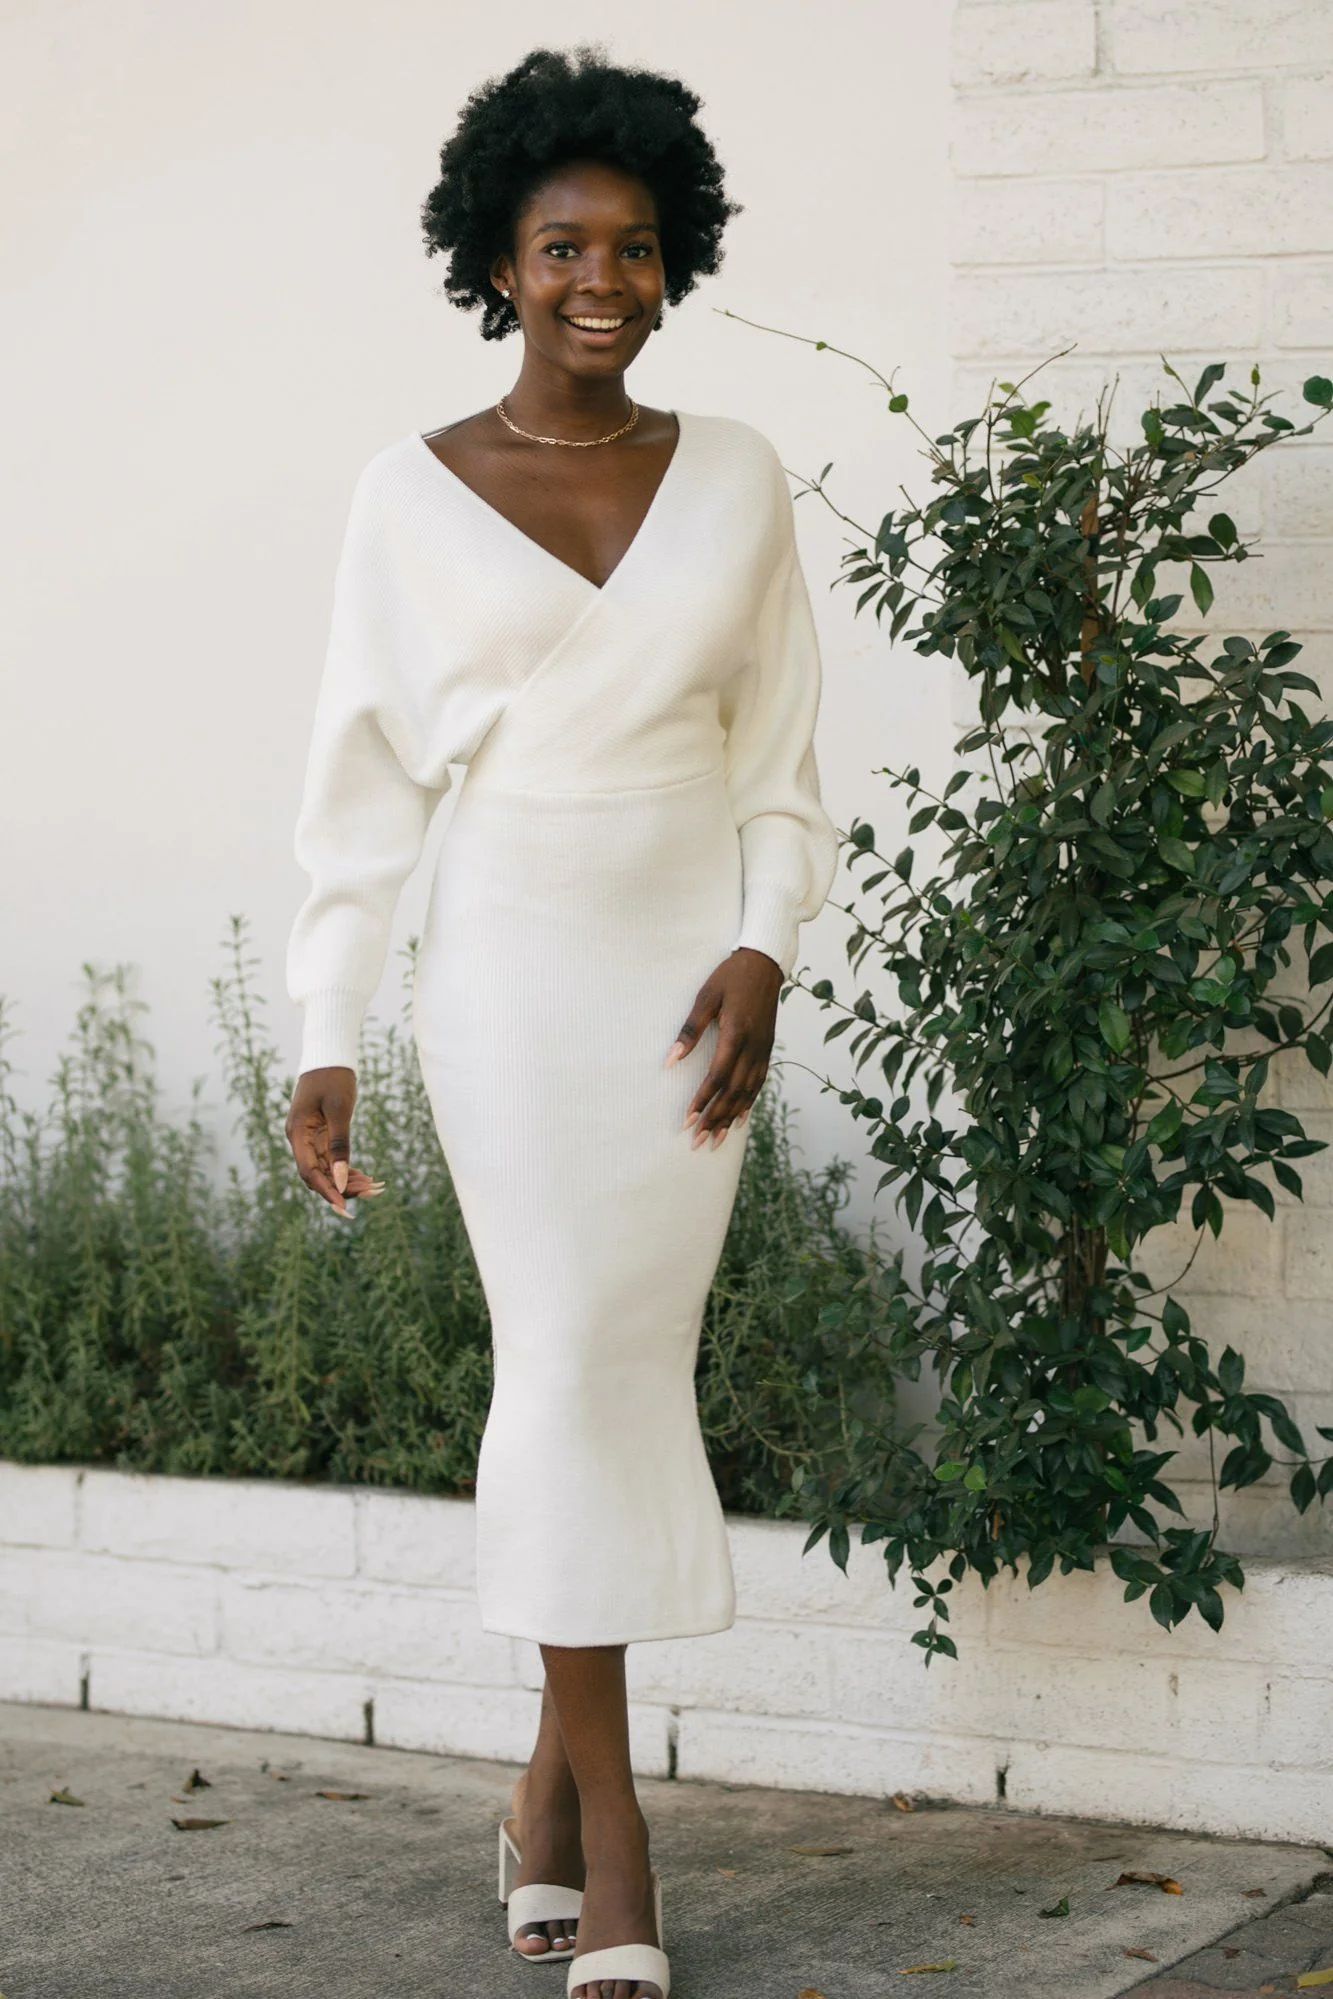 Lena Dolman Sleeve Sweater Dress | Morning Lavender